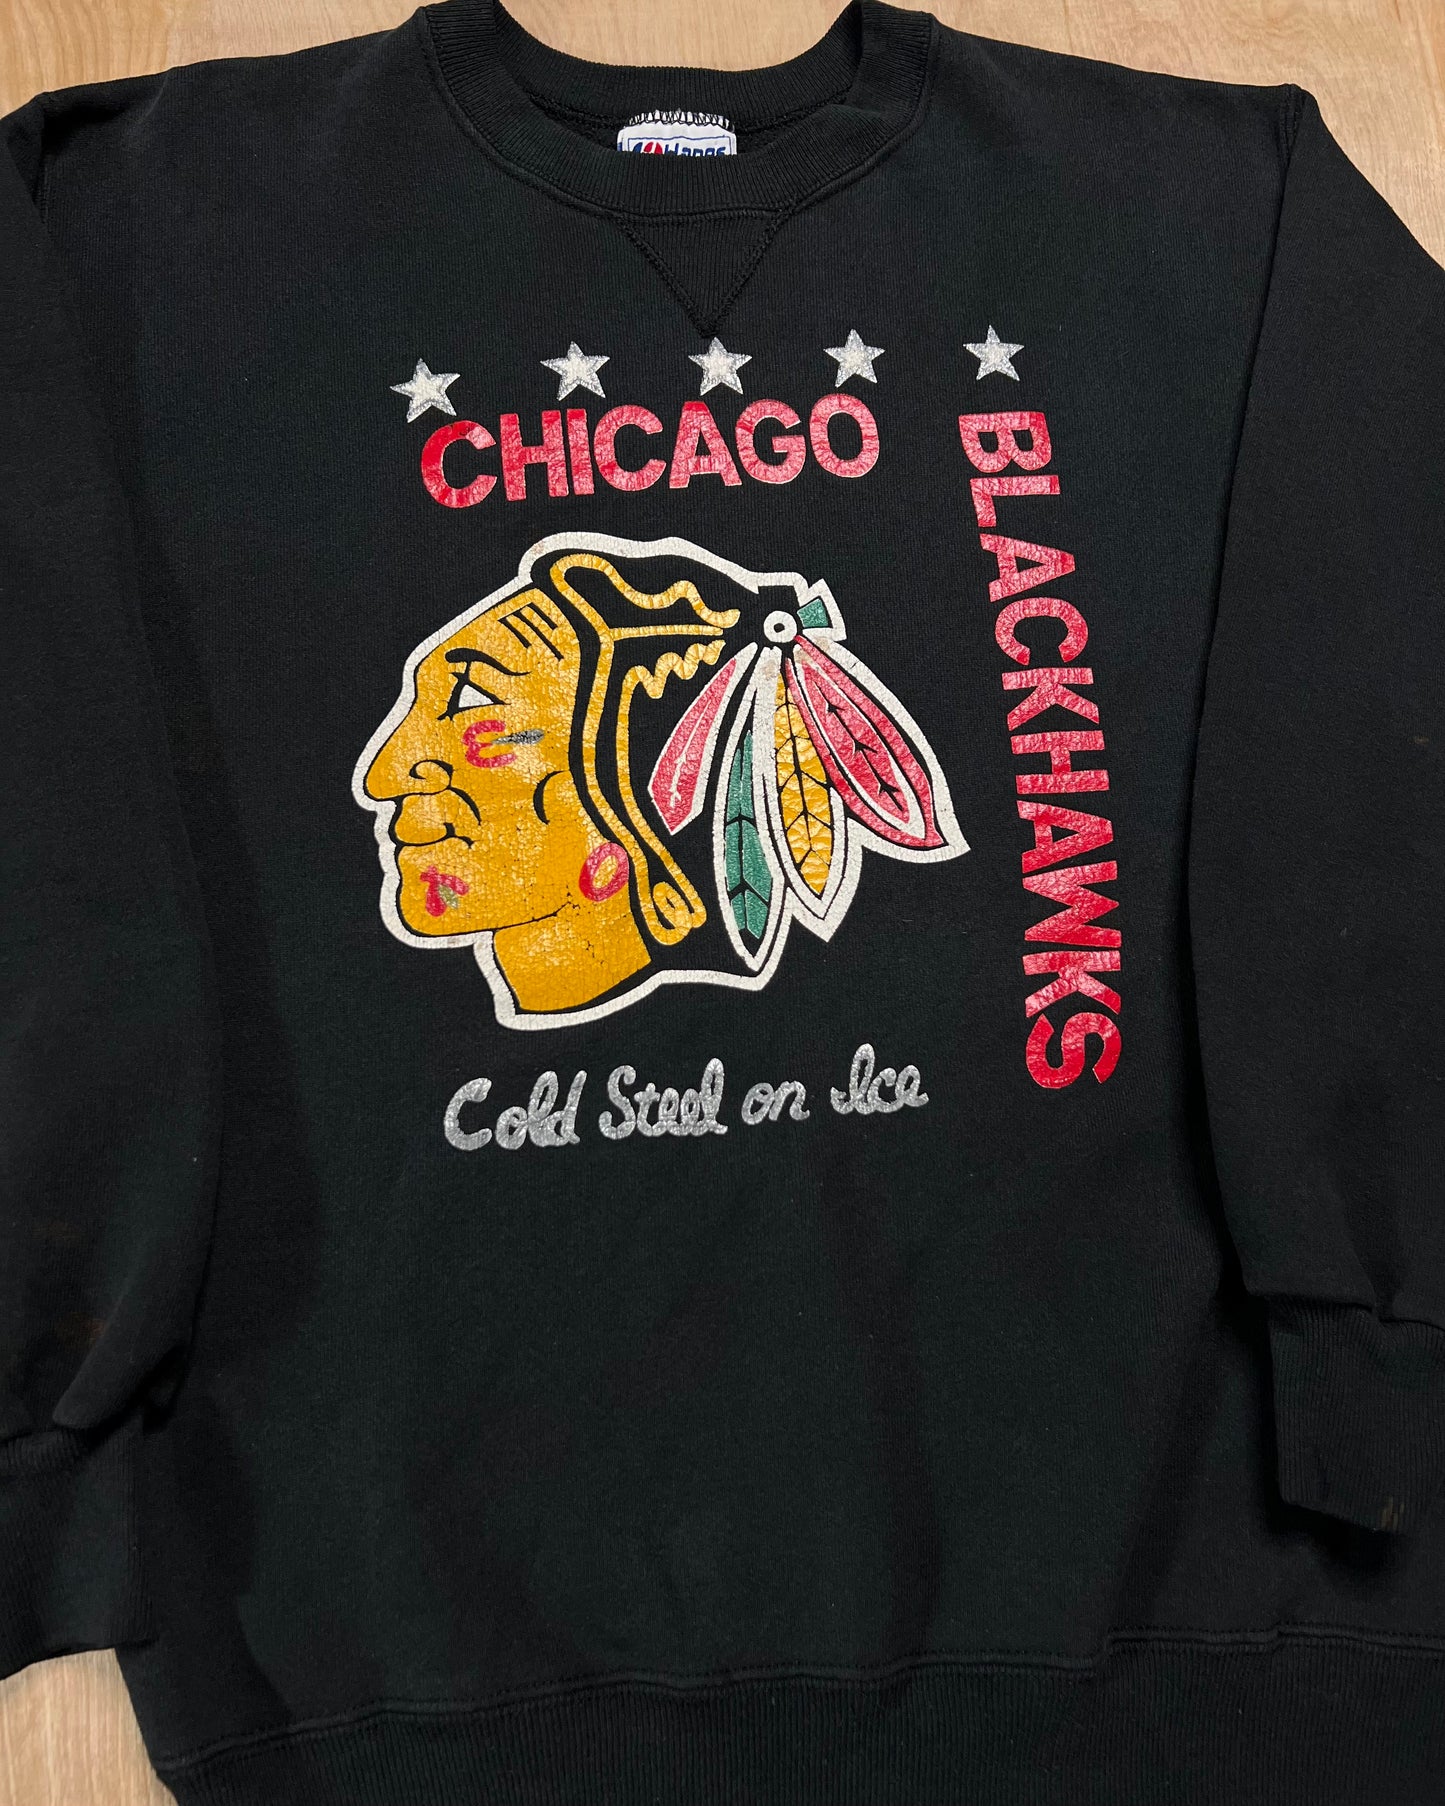 Vintage 1980's Chicago Blackhawks "Steel on Ice" Hanes Classics Crewneck